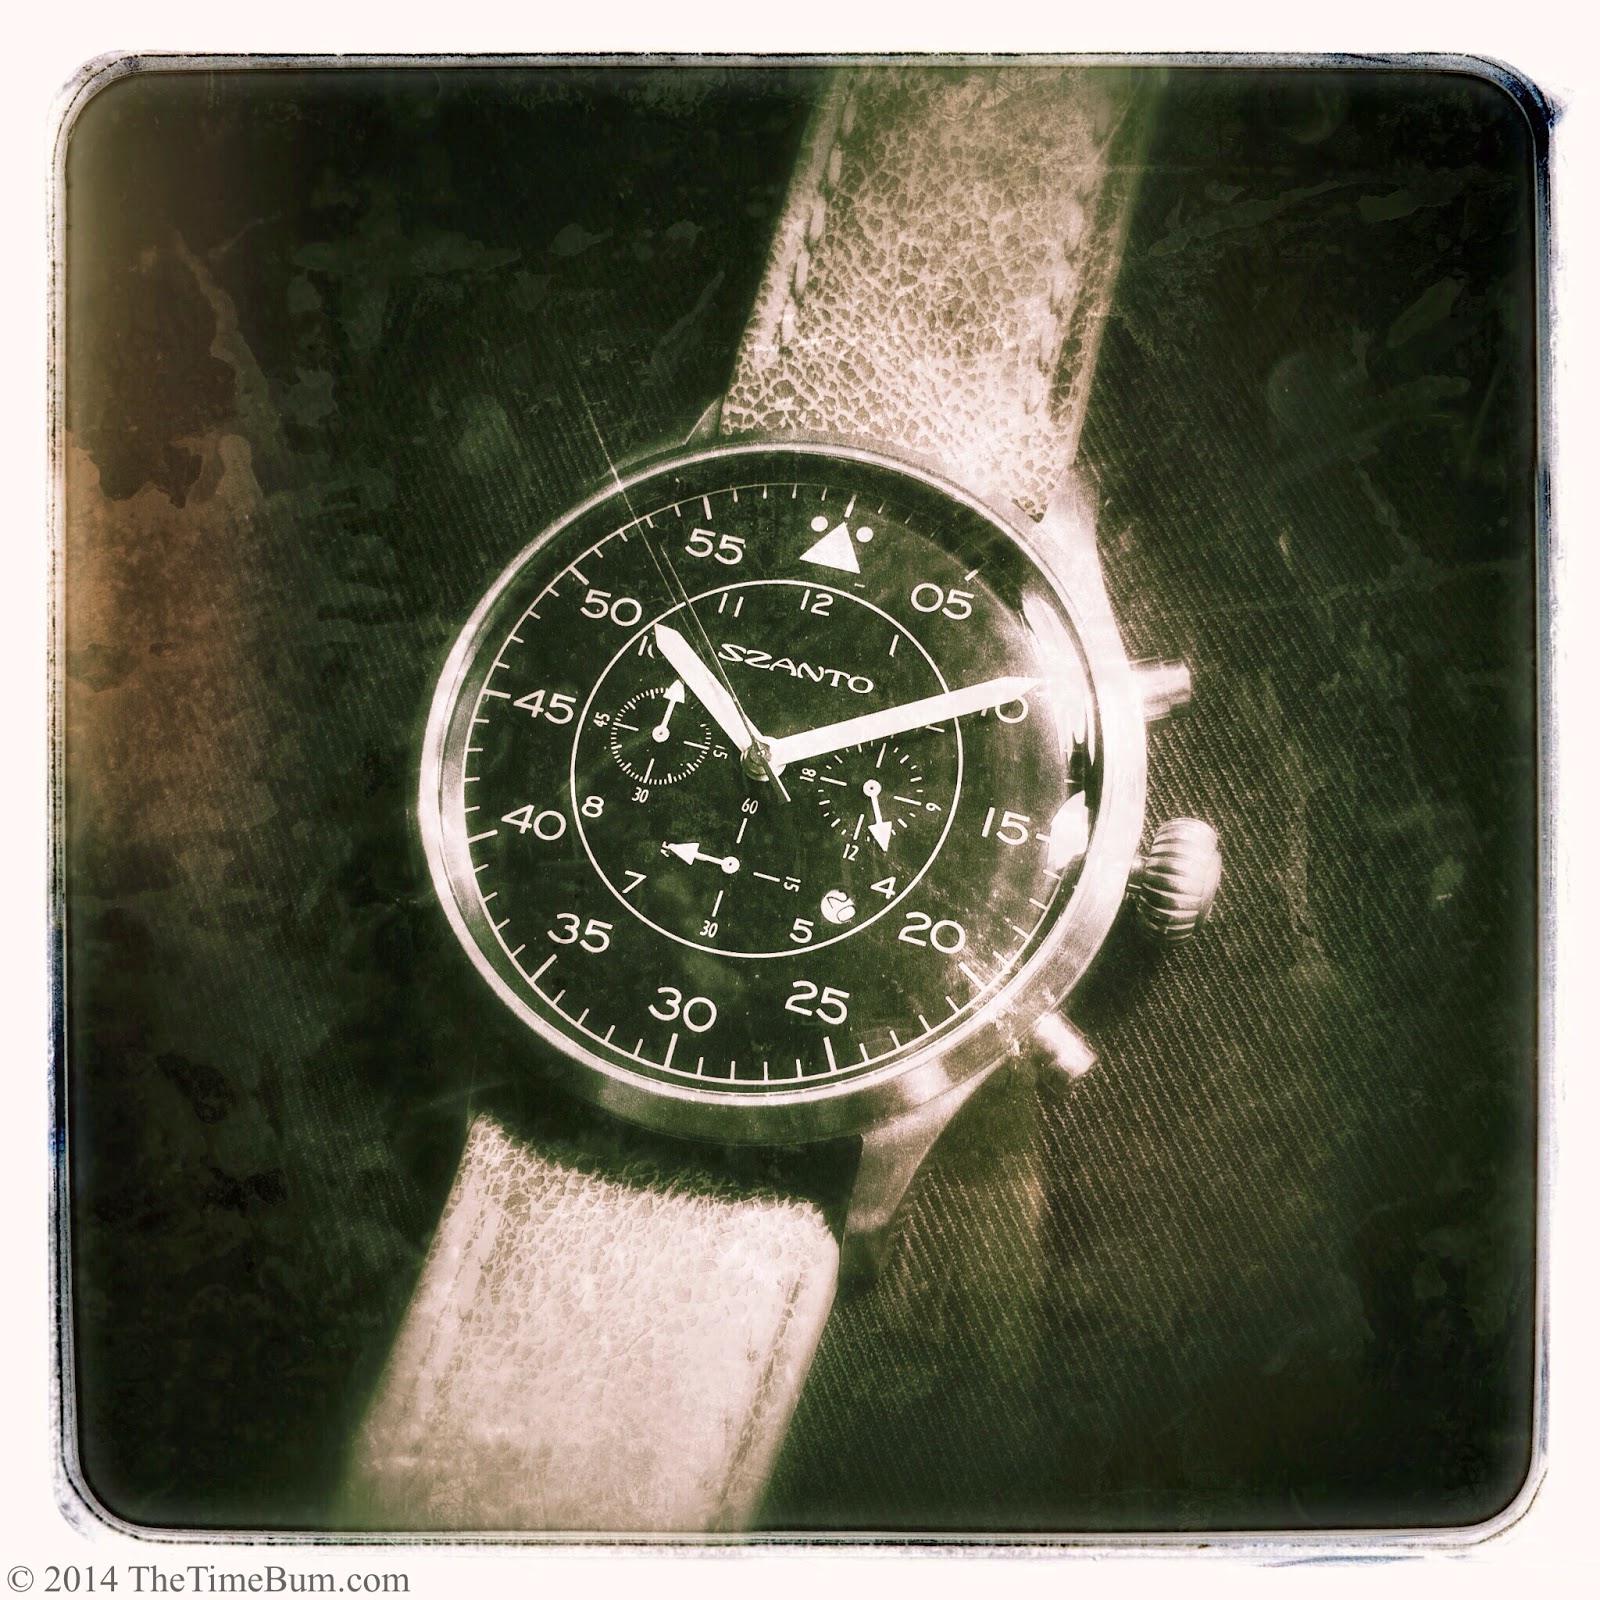 Szanto 2602 Pilot's Chronograph